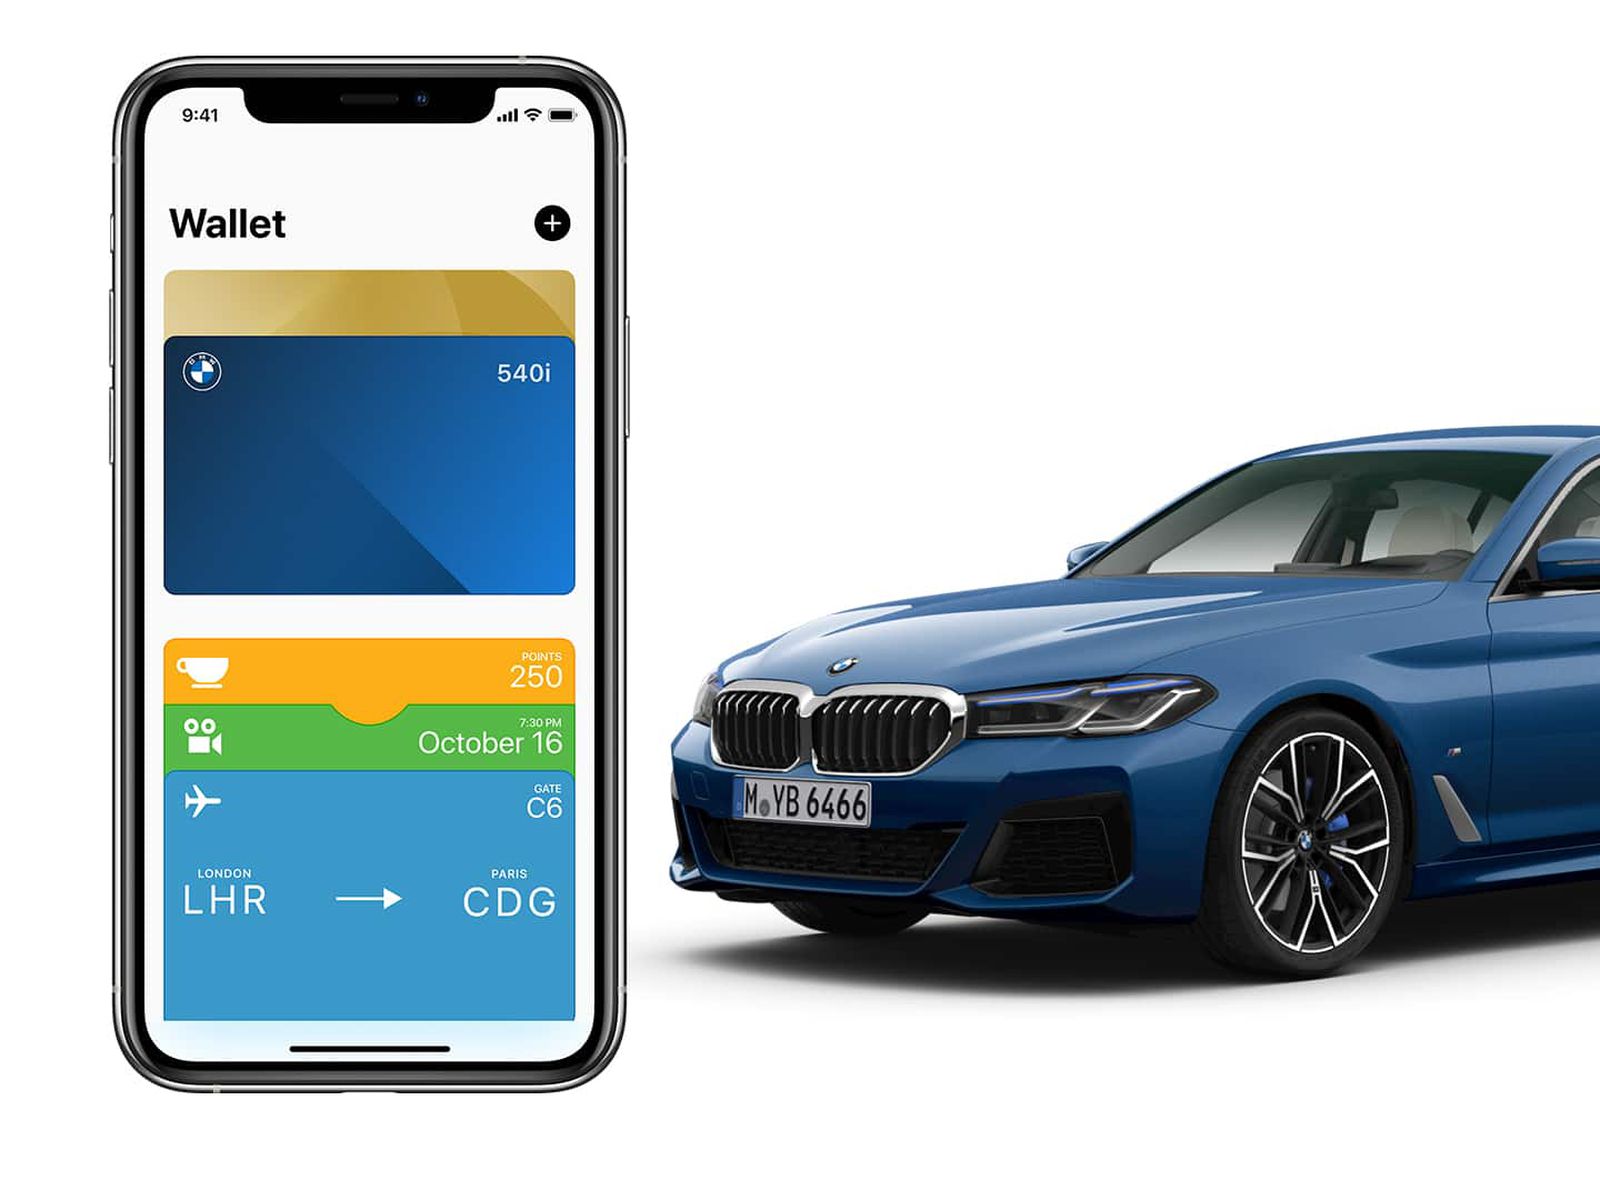 matchmaker opmerking Kalmerend BMW Updates Connected App With Car Keys Support - MacRumors